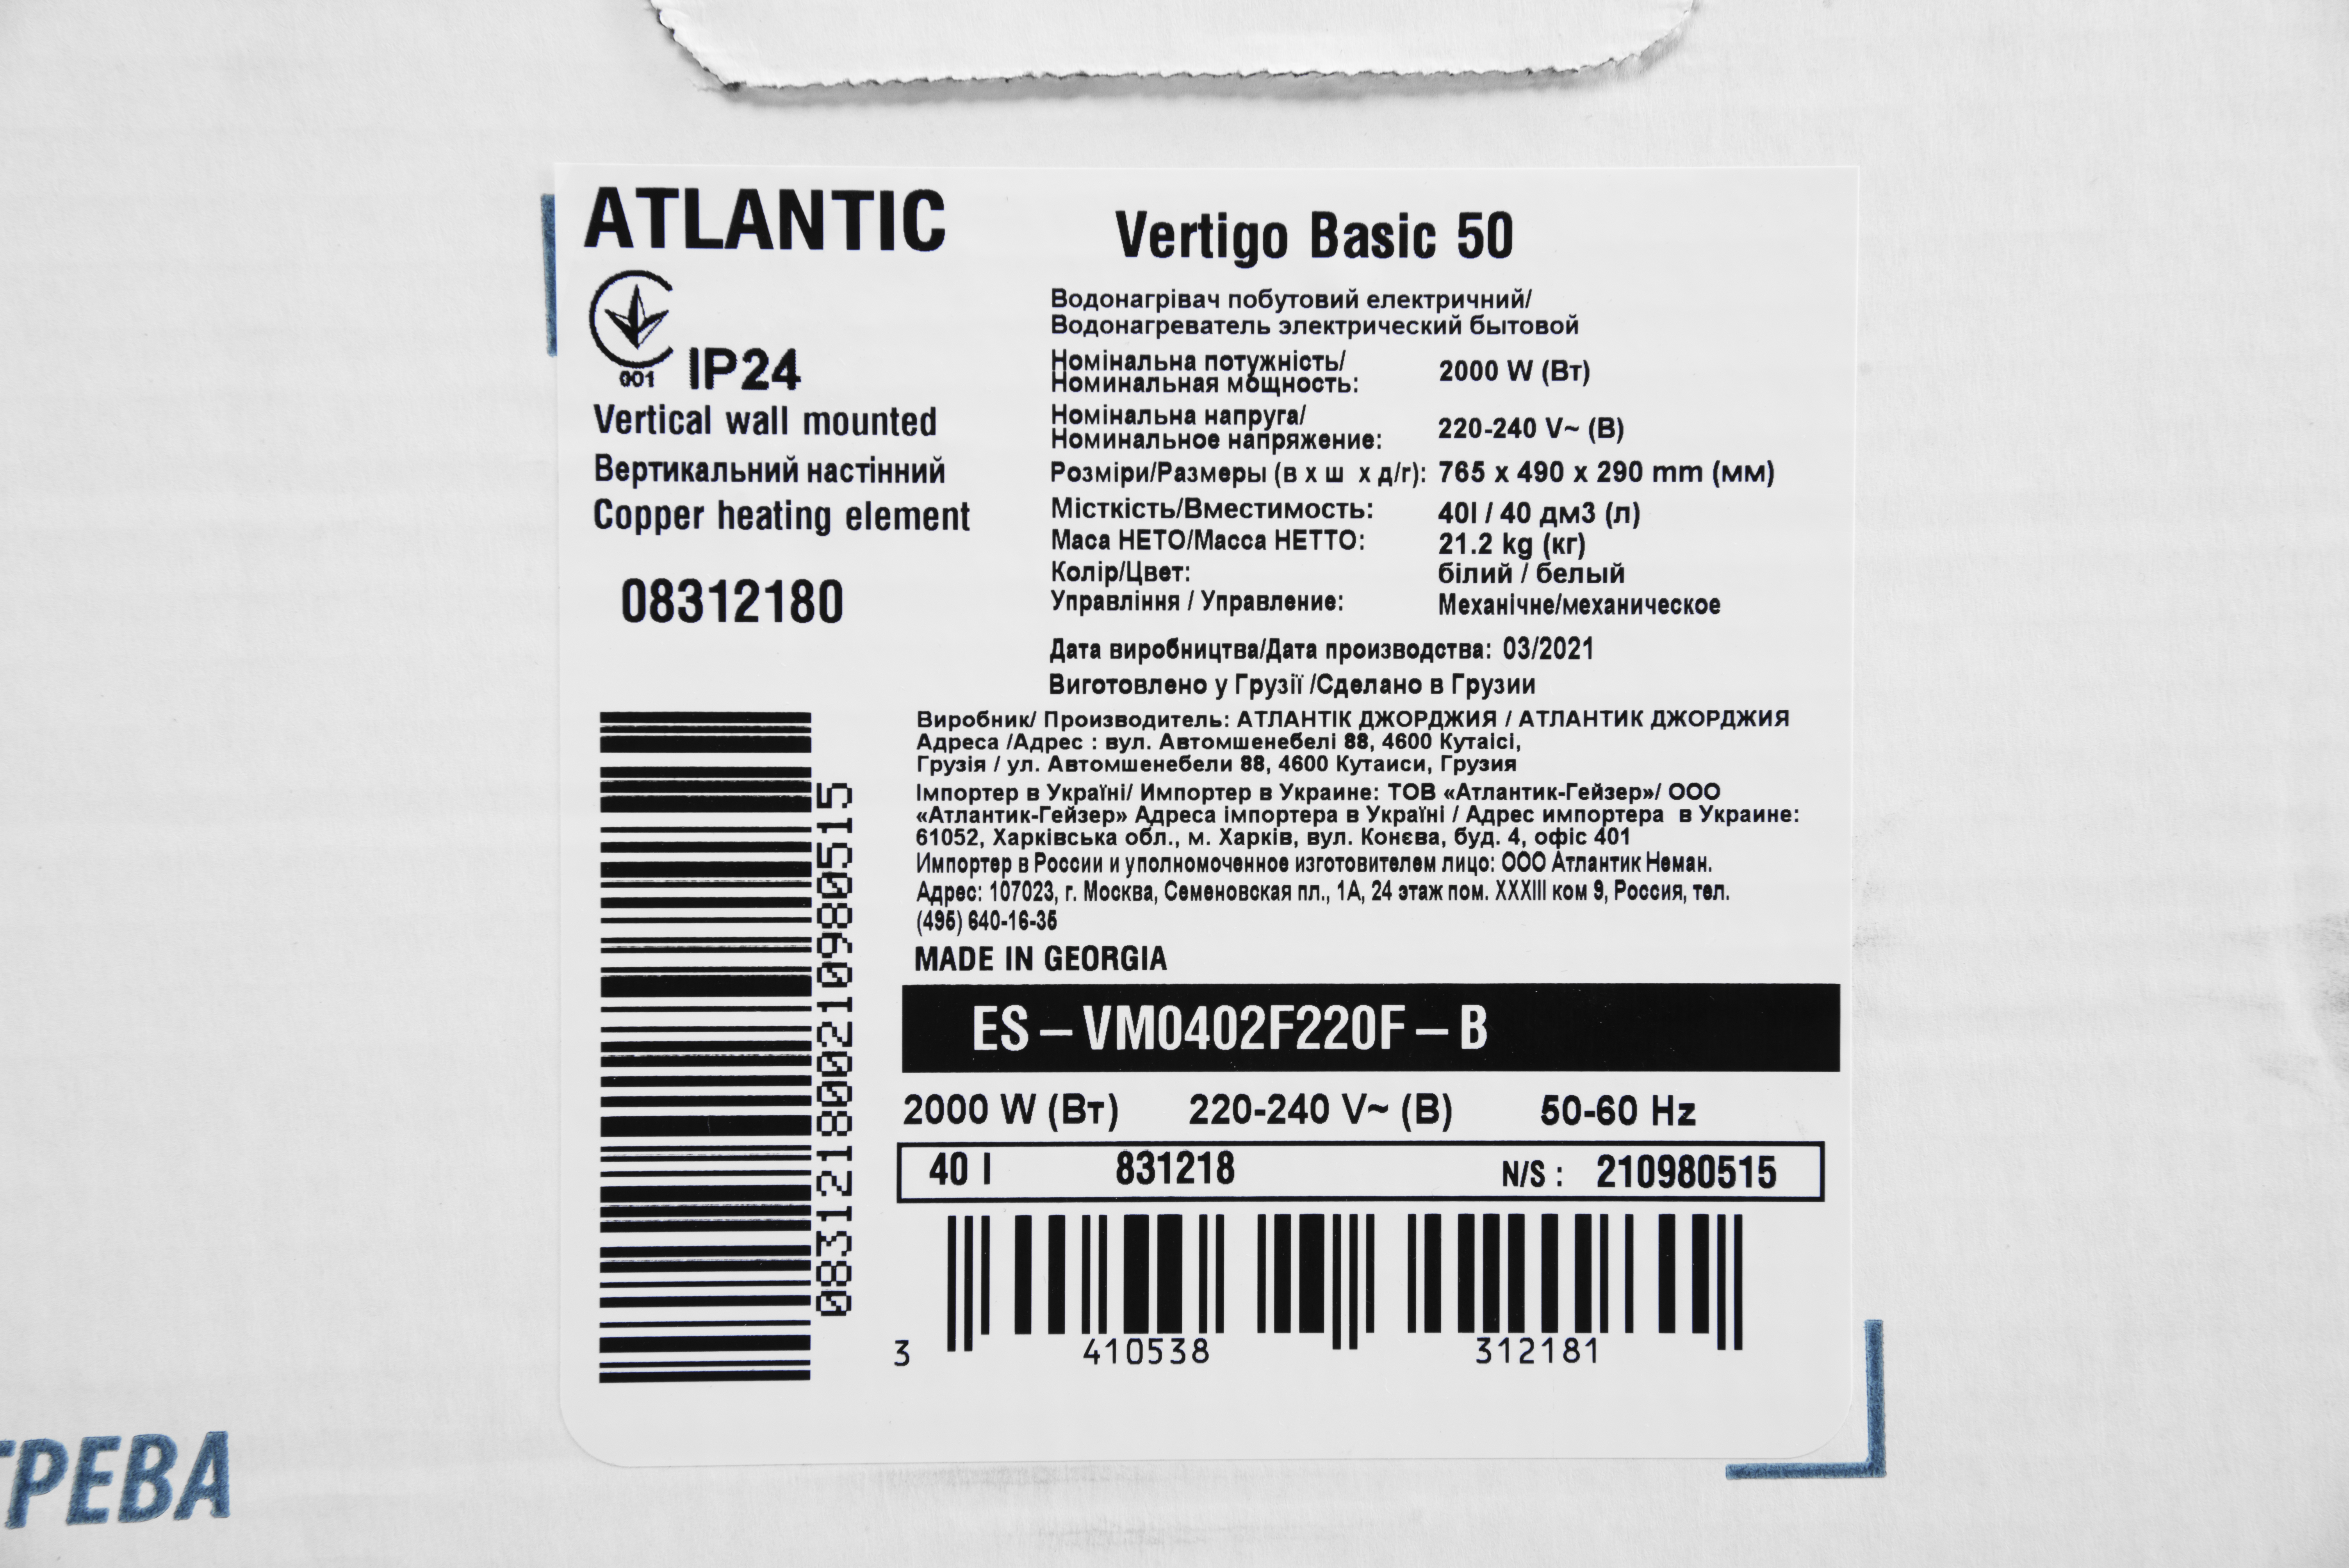 Atlantic Vertigo Basic 50 ES-VM0402F220F-B в продажі - фото 19